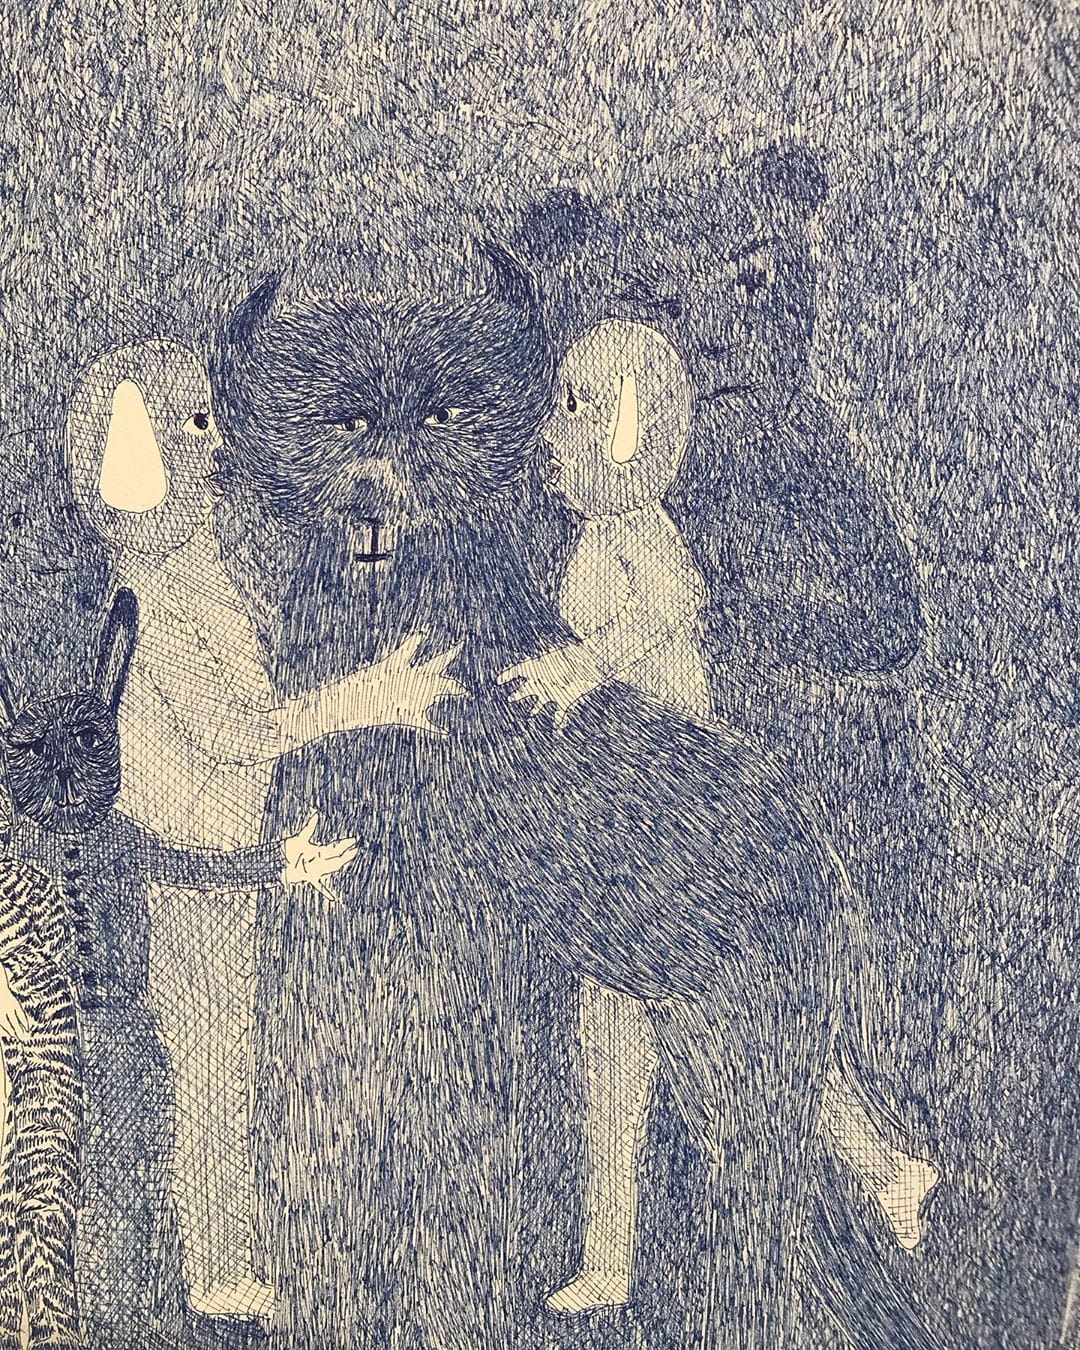 dessin stylo bic bleu foncé animal ours famille 